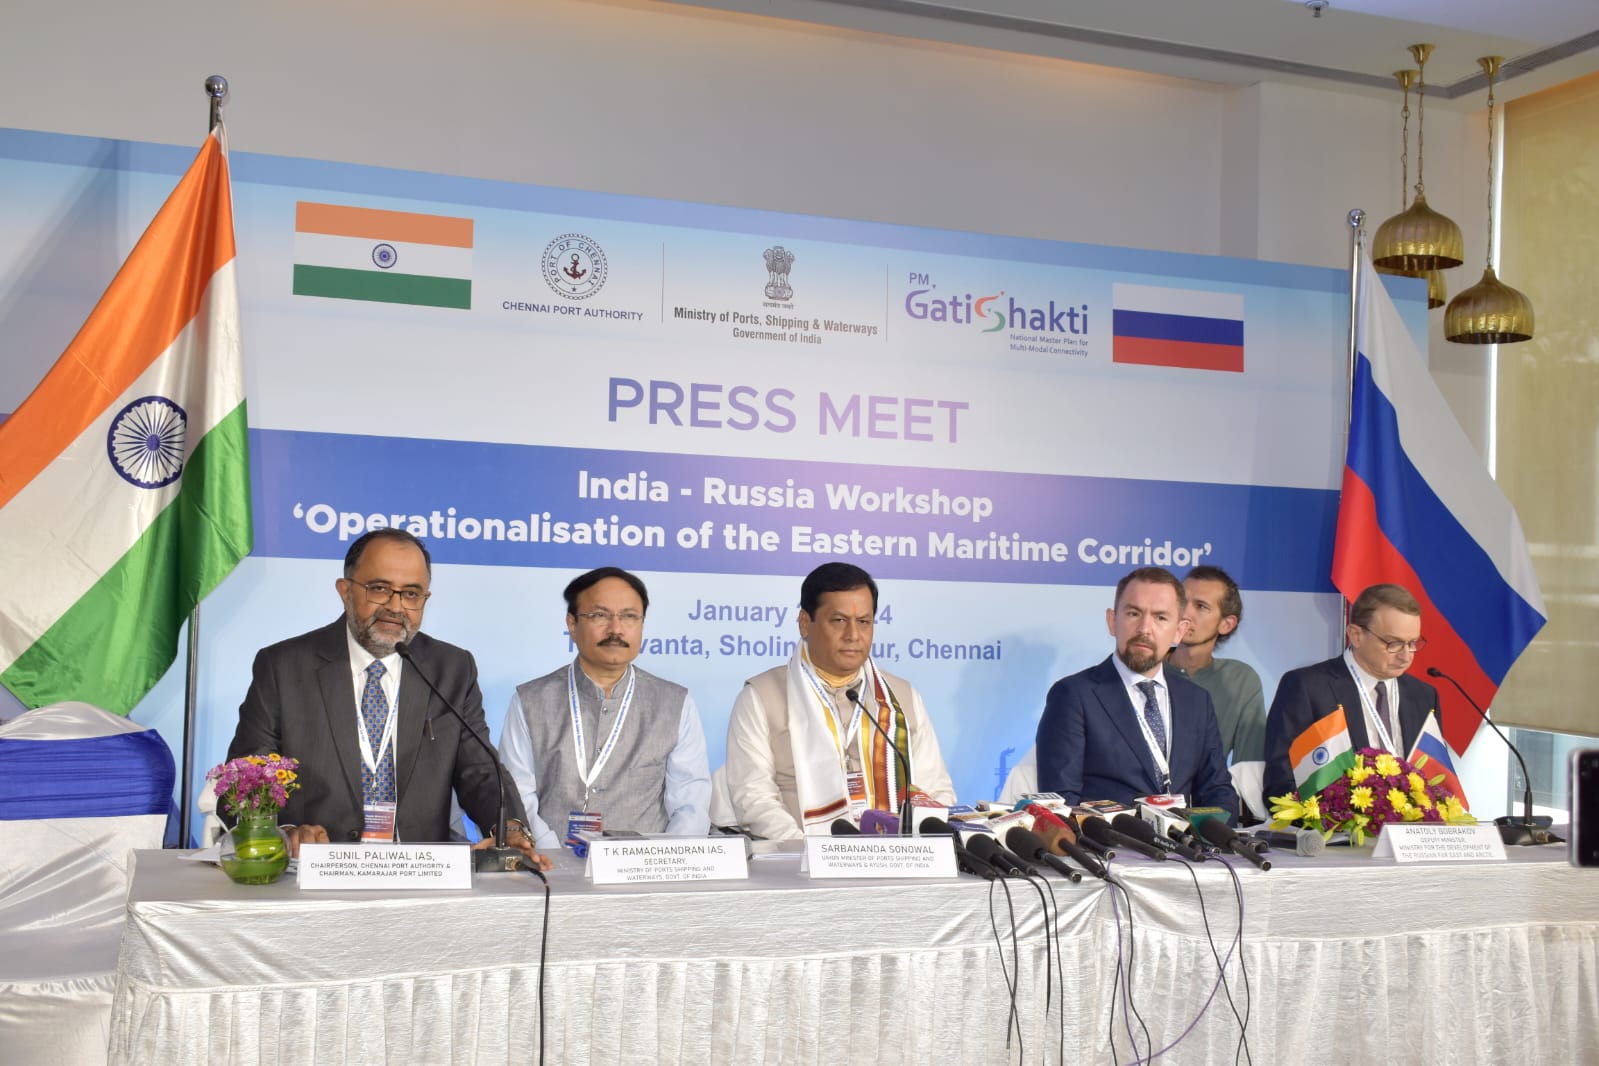 Chennai Port organizes India-Russia Workshop on Operationalisation of the Eastern Maritime Corridor